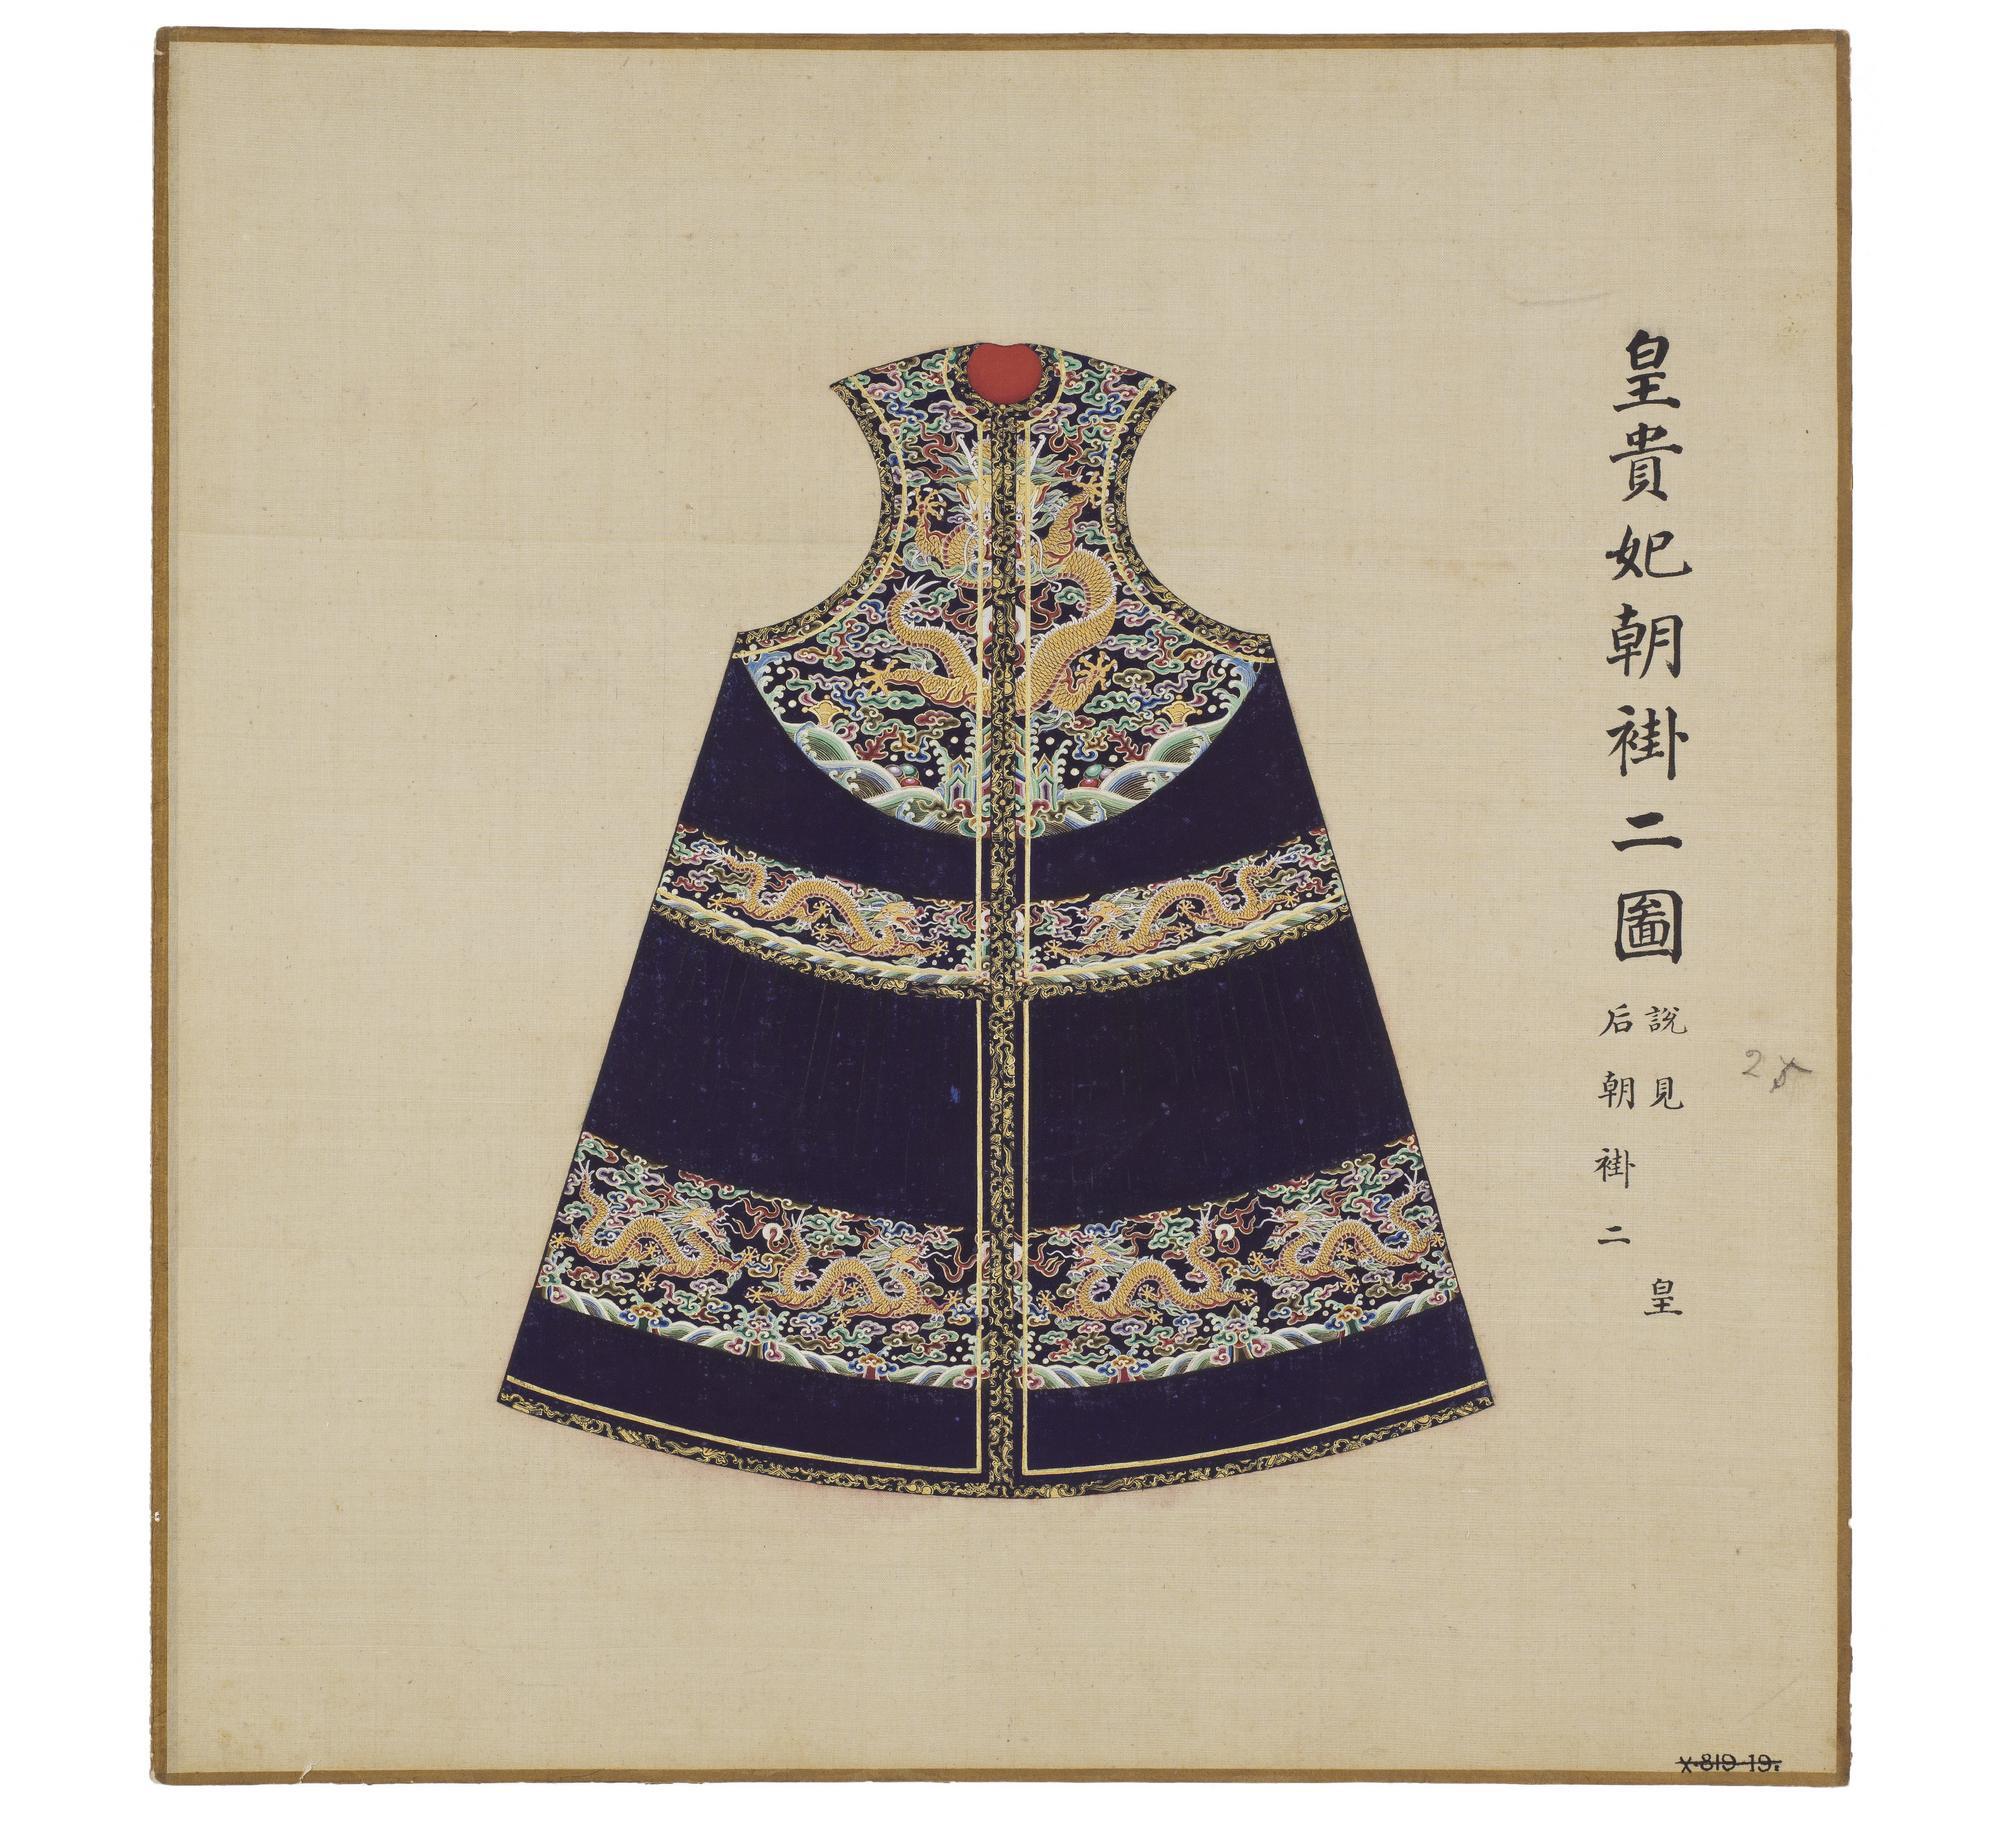 Huangchao liqi tushi (Illustrations of Imperial Ritual Paraphernalia)